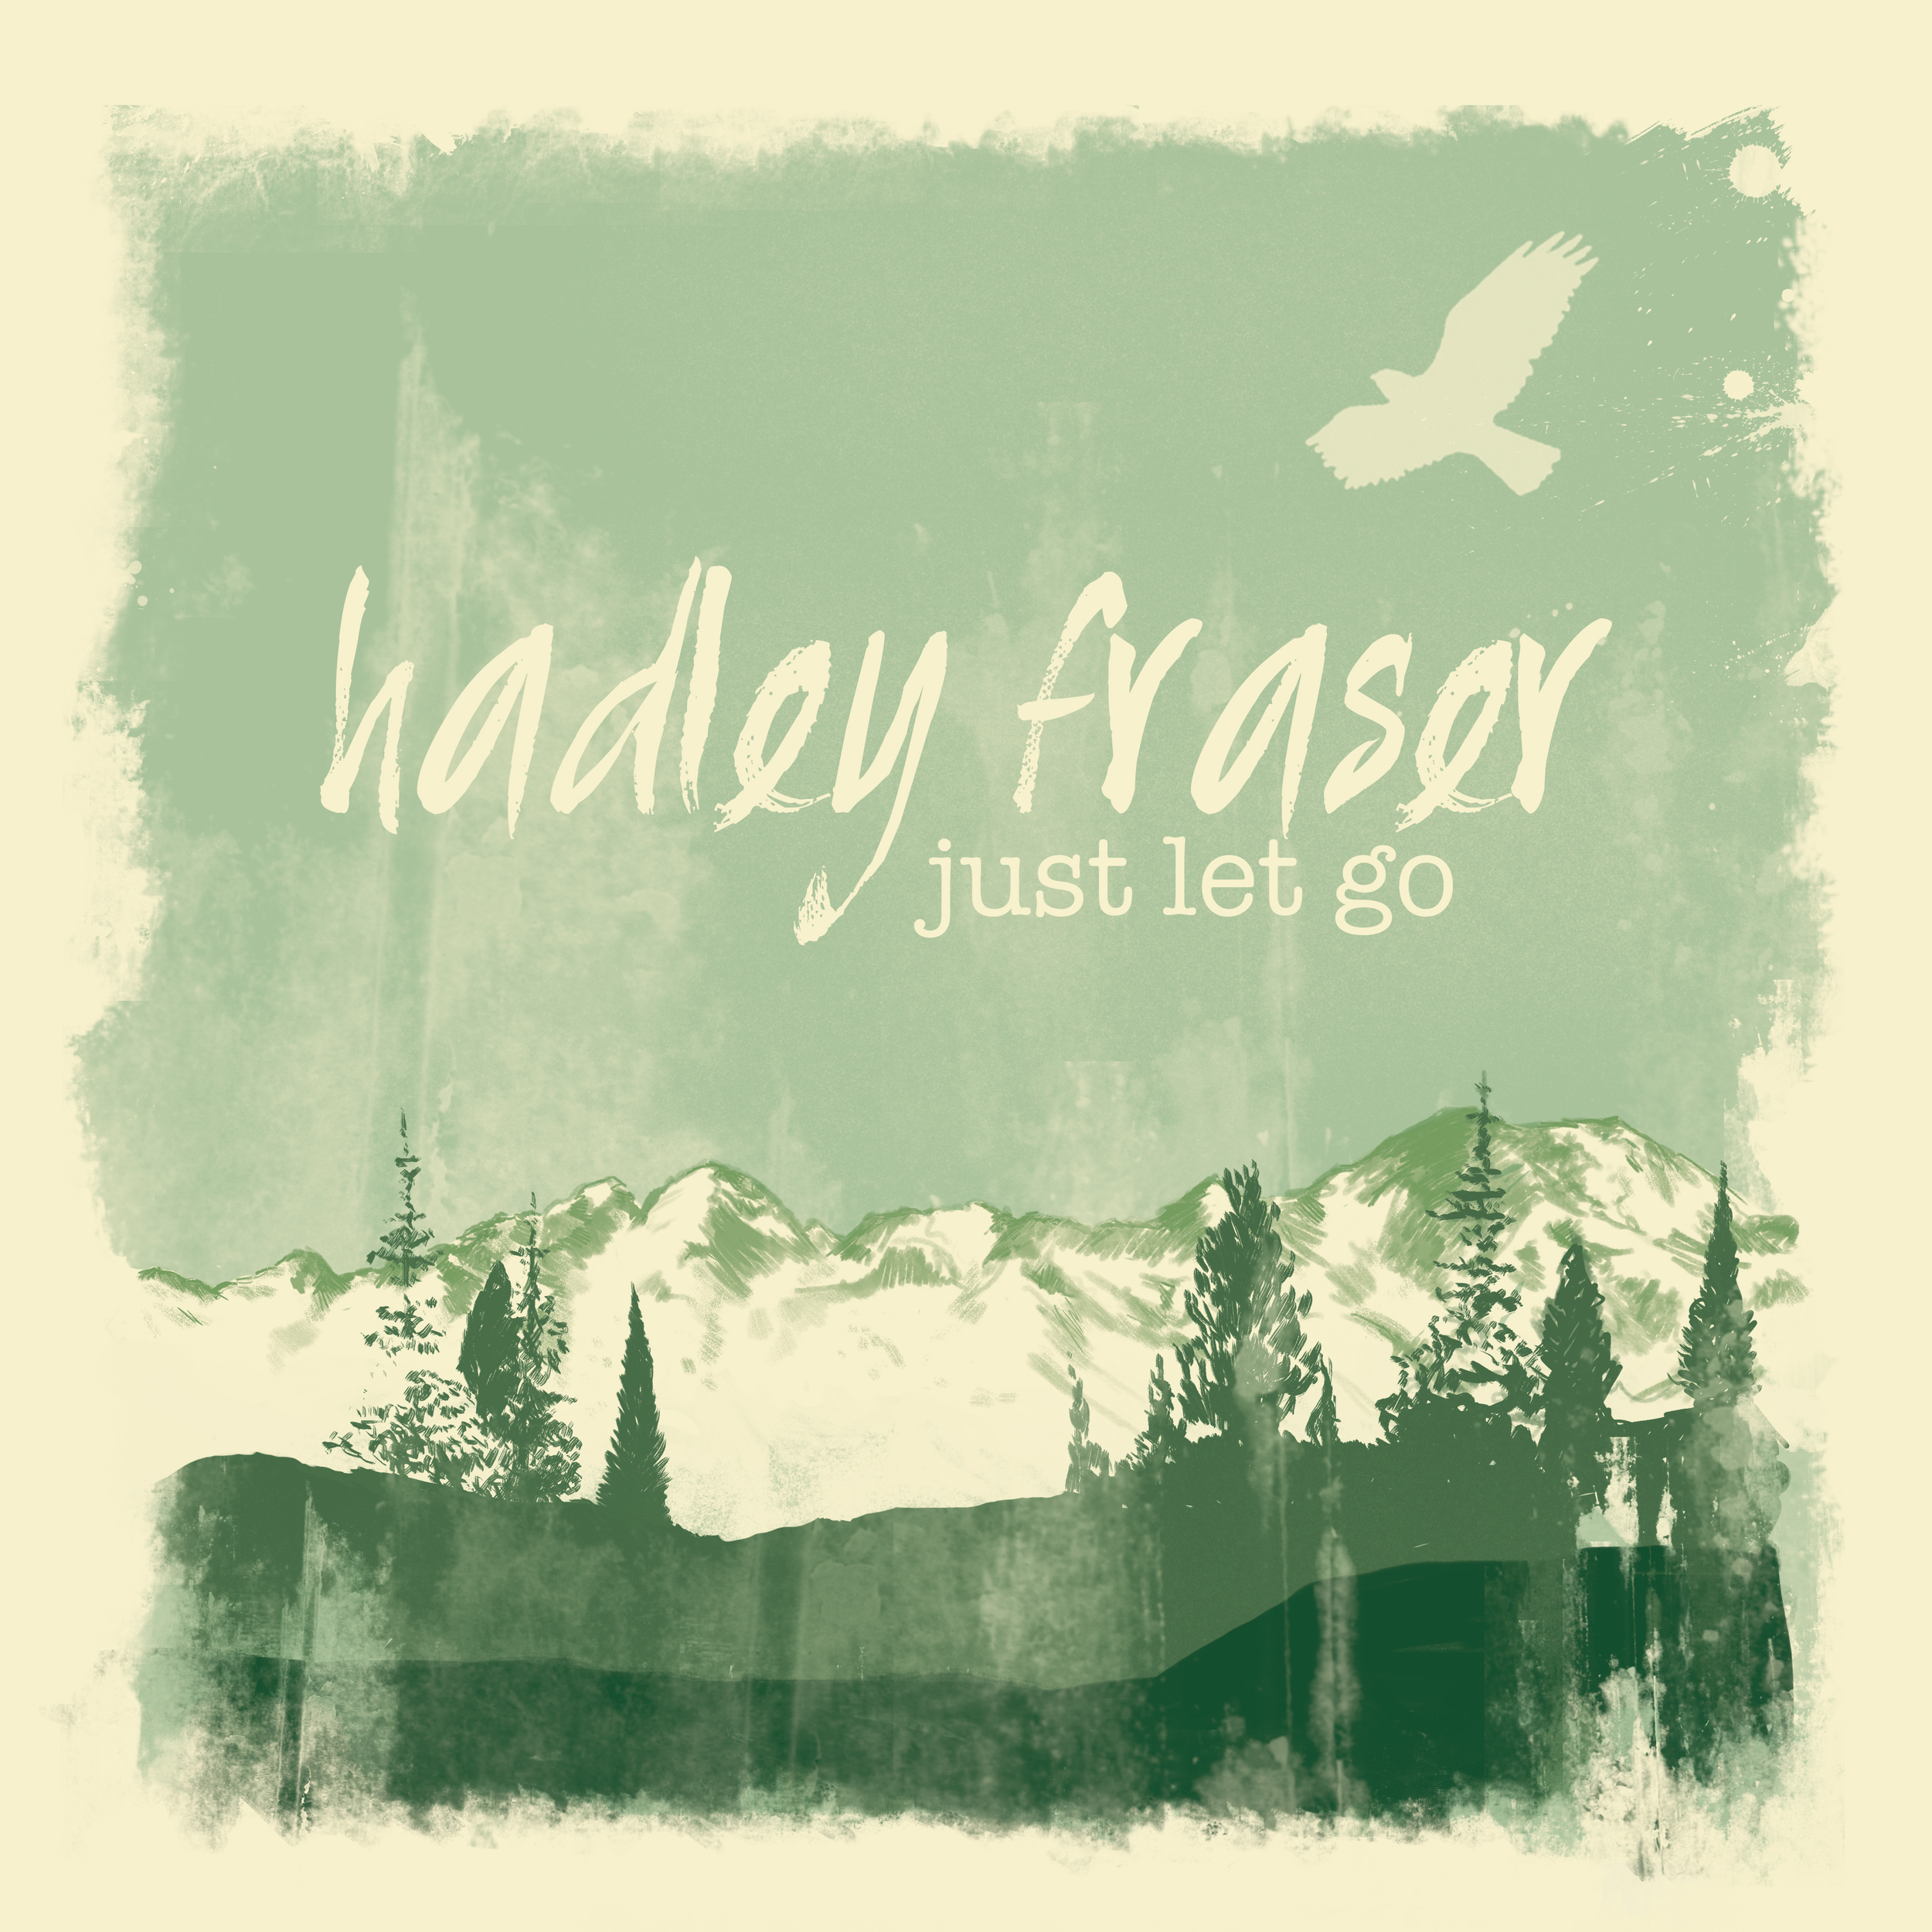  Hadley Fraser EP Artwork  https://hadleyfraser.bandcamp.com/releases&nbsp; &nbsp; 